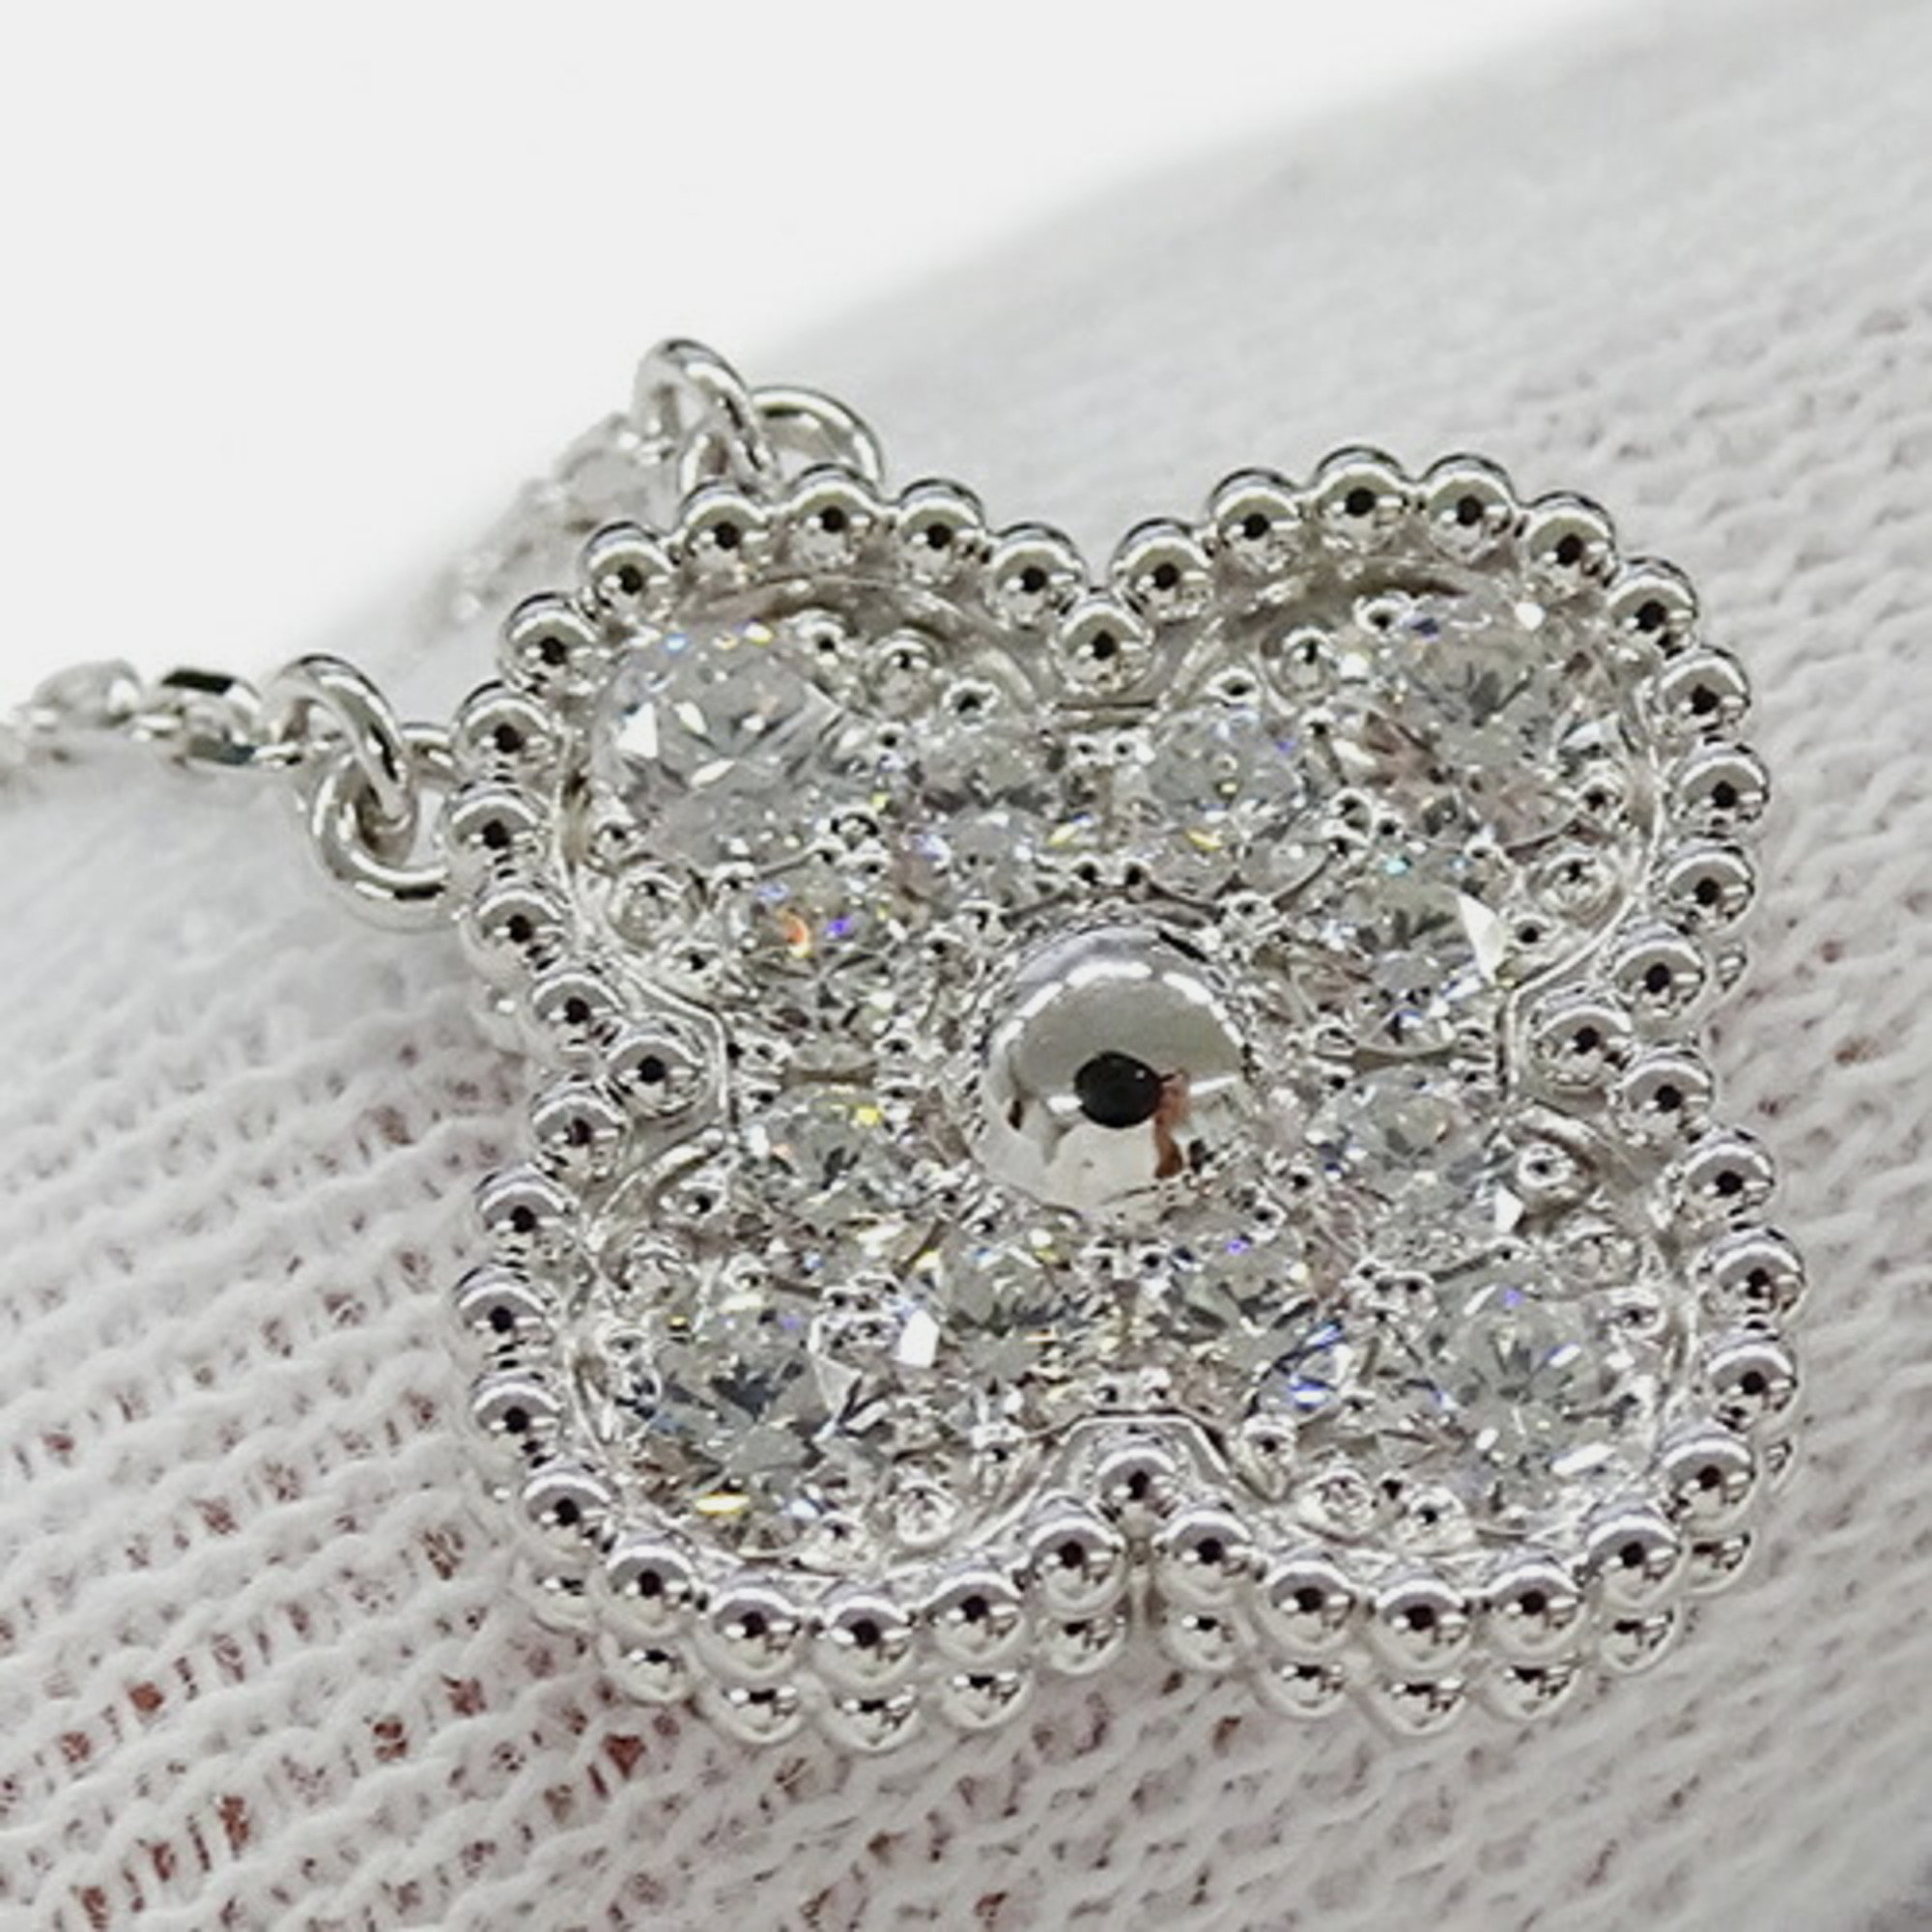 Van Cleef & Arpels Vintage Alhambra 18K White Gold Diamond Necklace